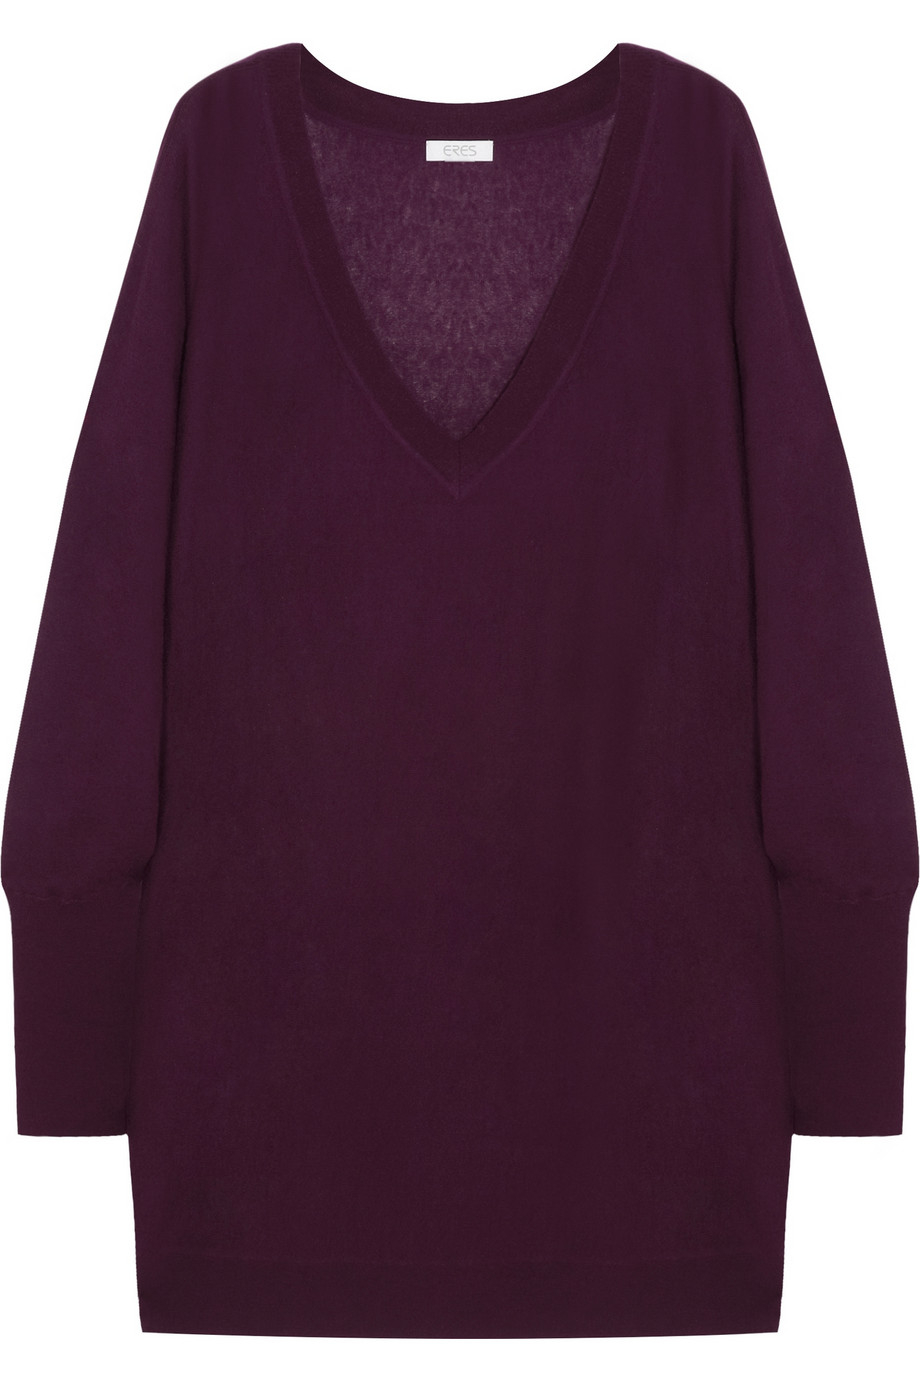 Eres Futile Anonyme Cashmere Sweater in Purple - Lyst